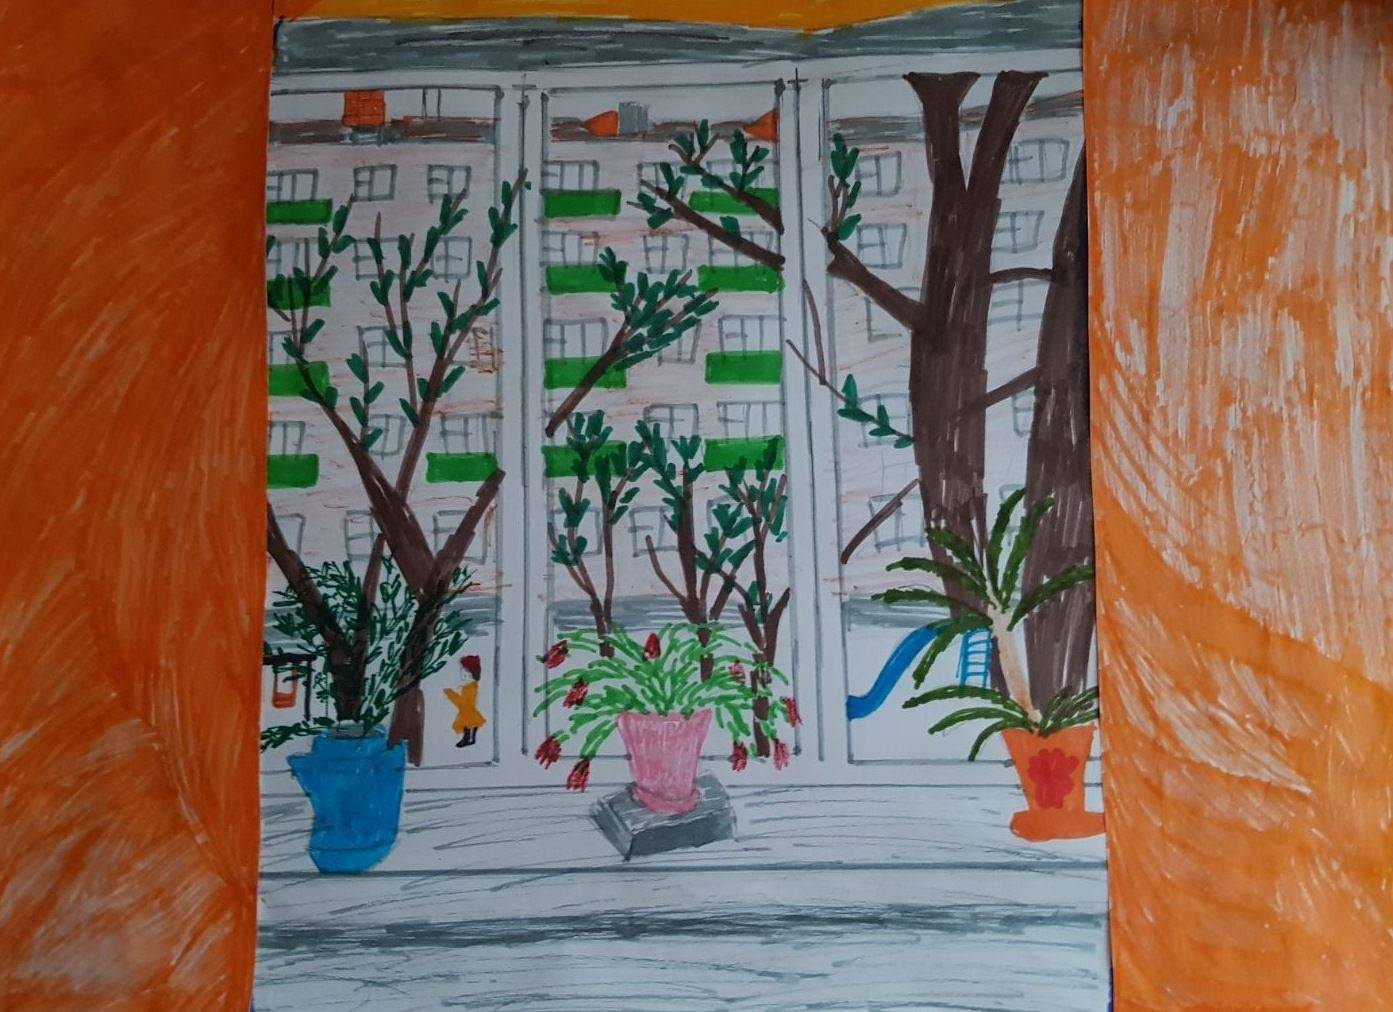 Bp vjtuj jryf 3. Вид из окна рисунок детский.